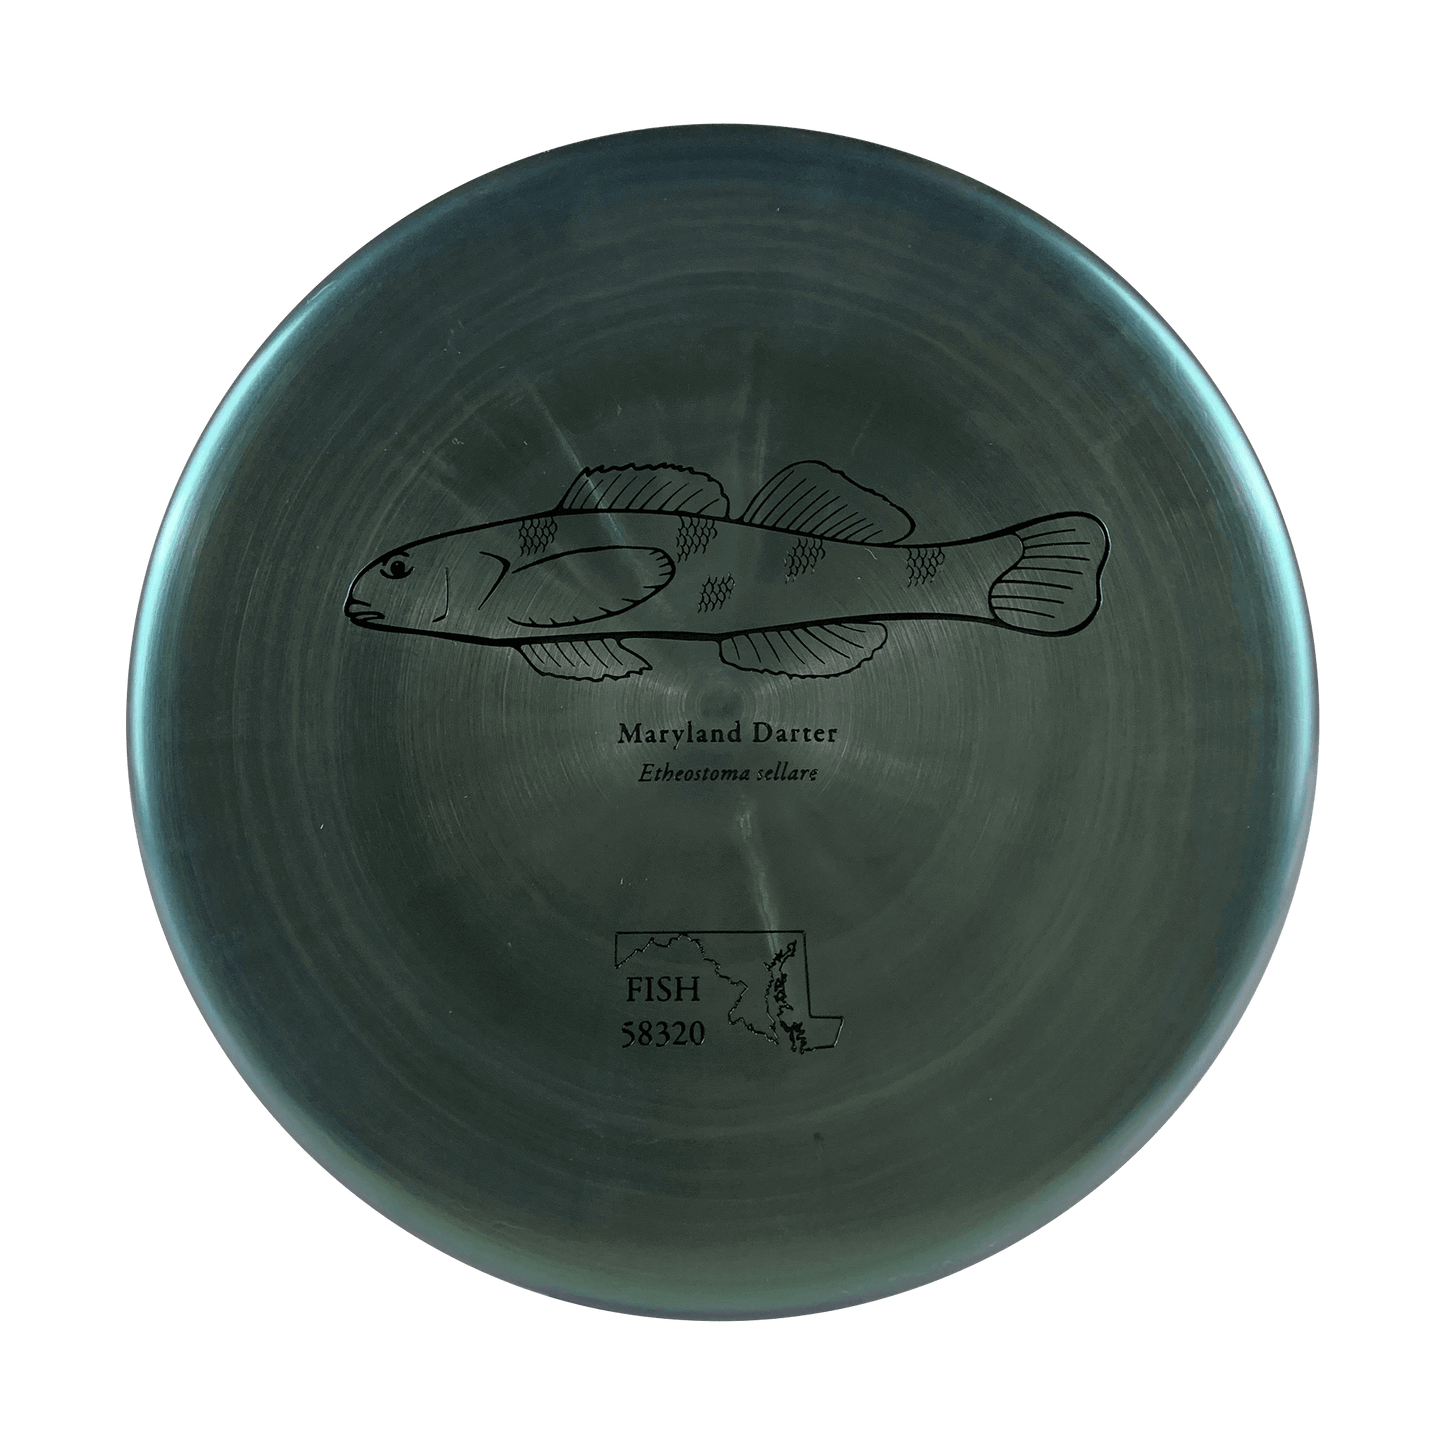 ESP Zone - Andrew Fish Maryland Darter Stamp Disc Discraft metallic green 173 